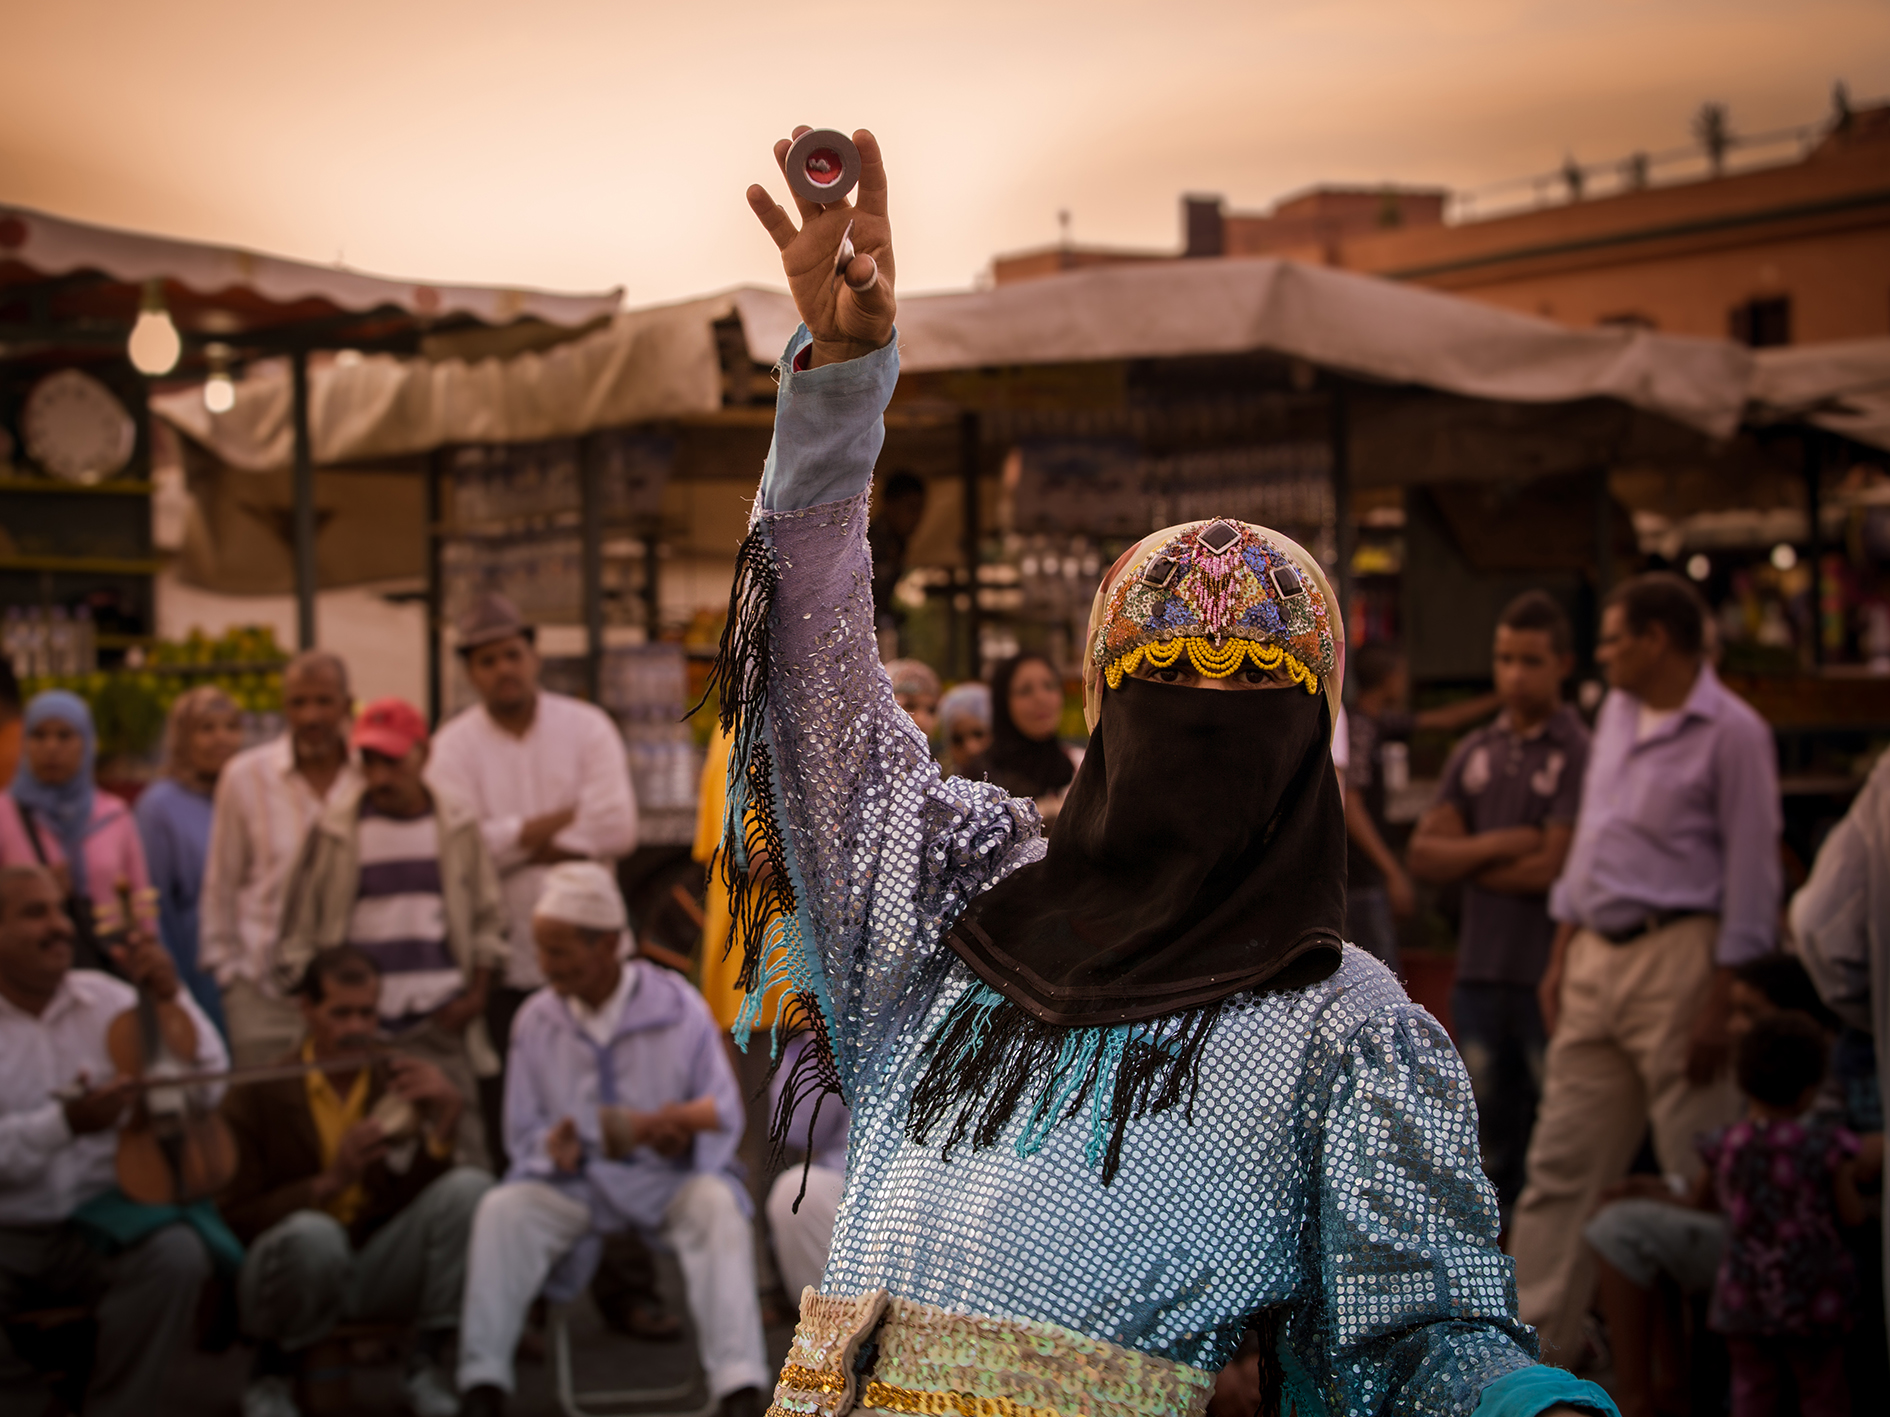 A dancer in Djemaa el Fna square, Marrakech, Morocco